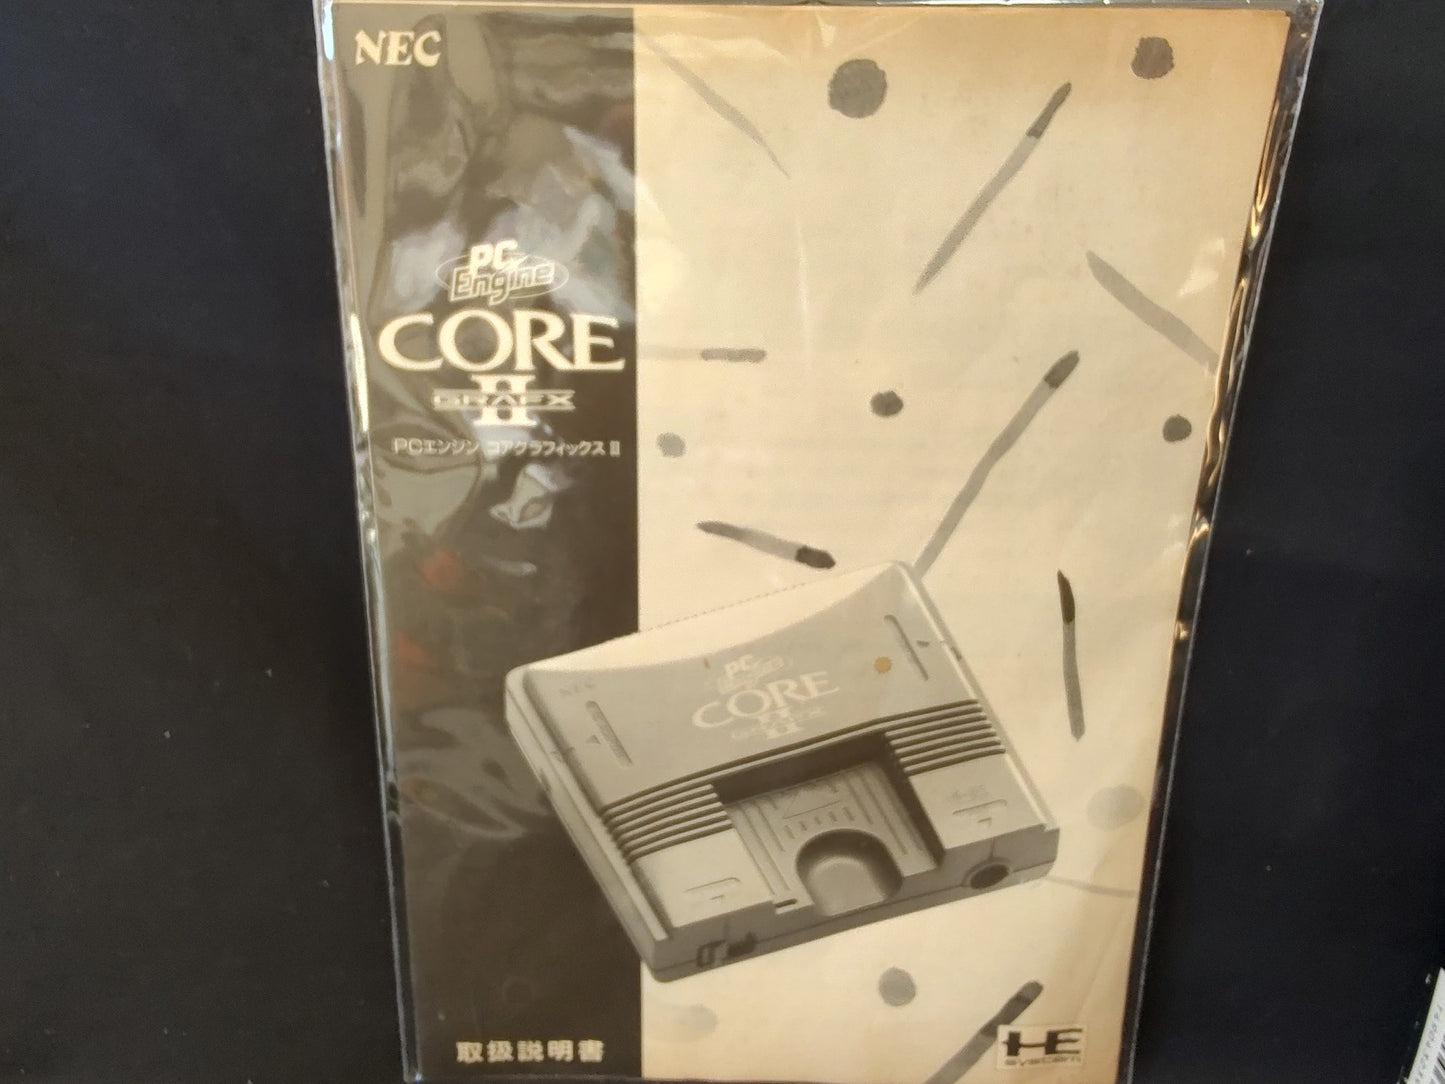 NEC PC Engine Coregrafx2 Console PI-TG7 TurboGrafx16,Pad,AV cable,Box set-f1204-